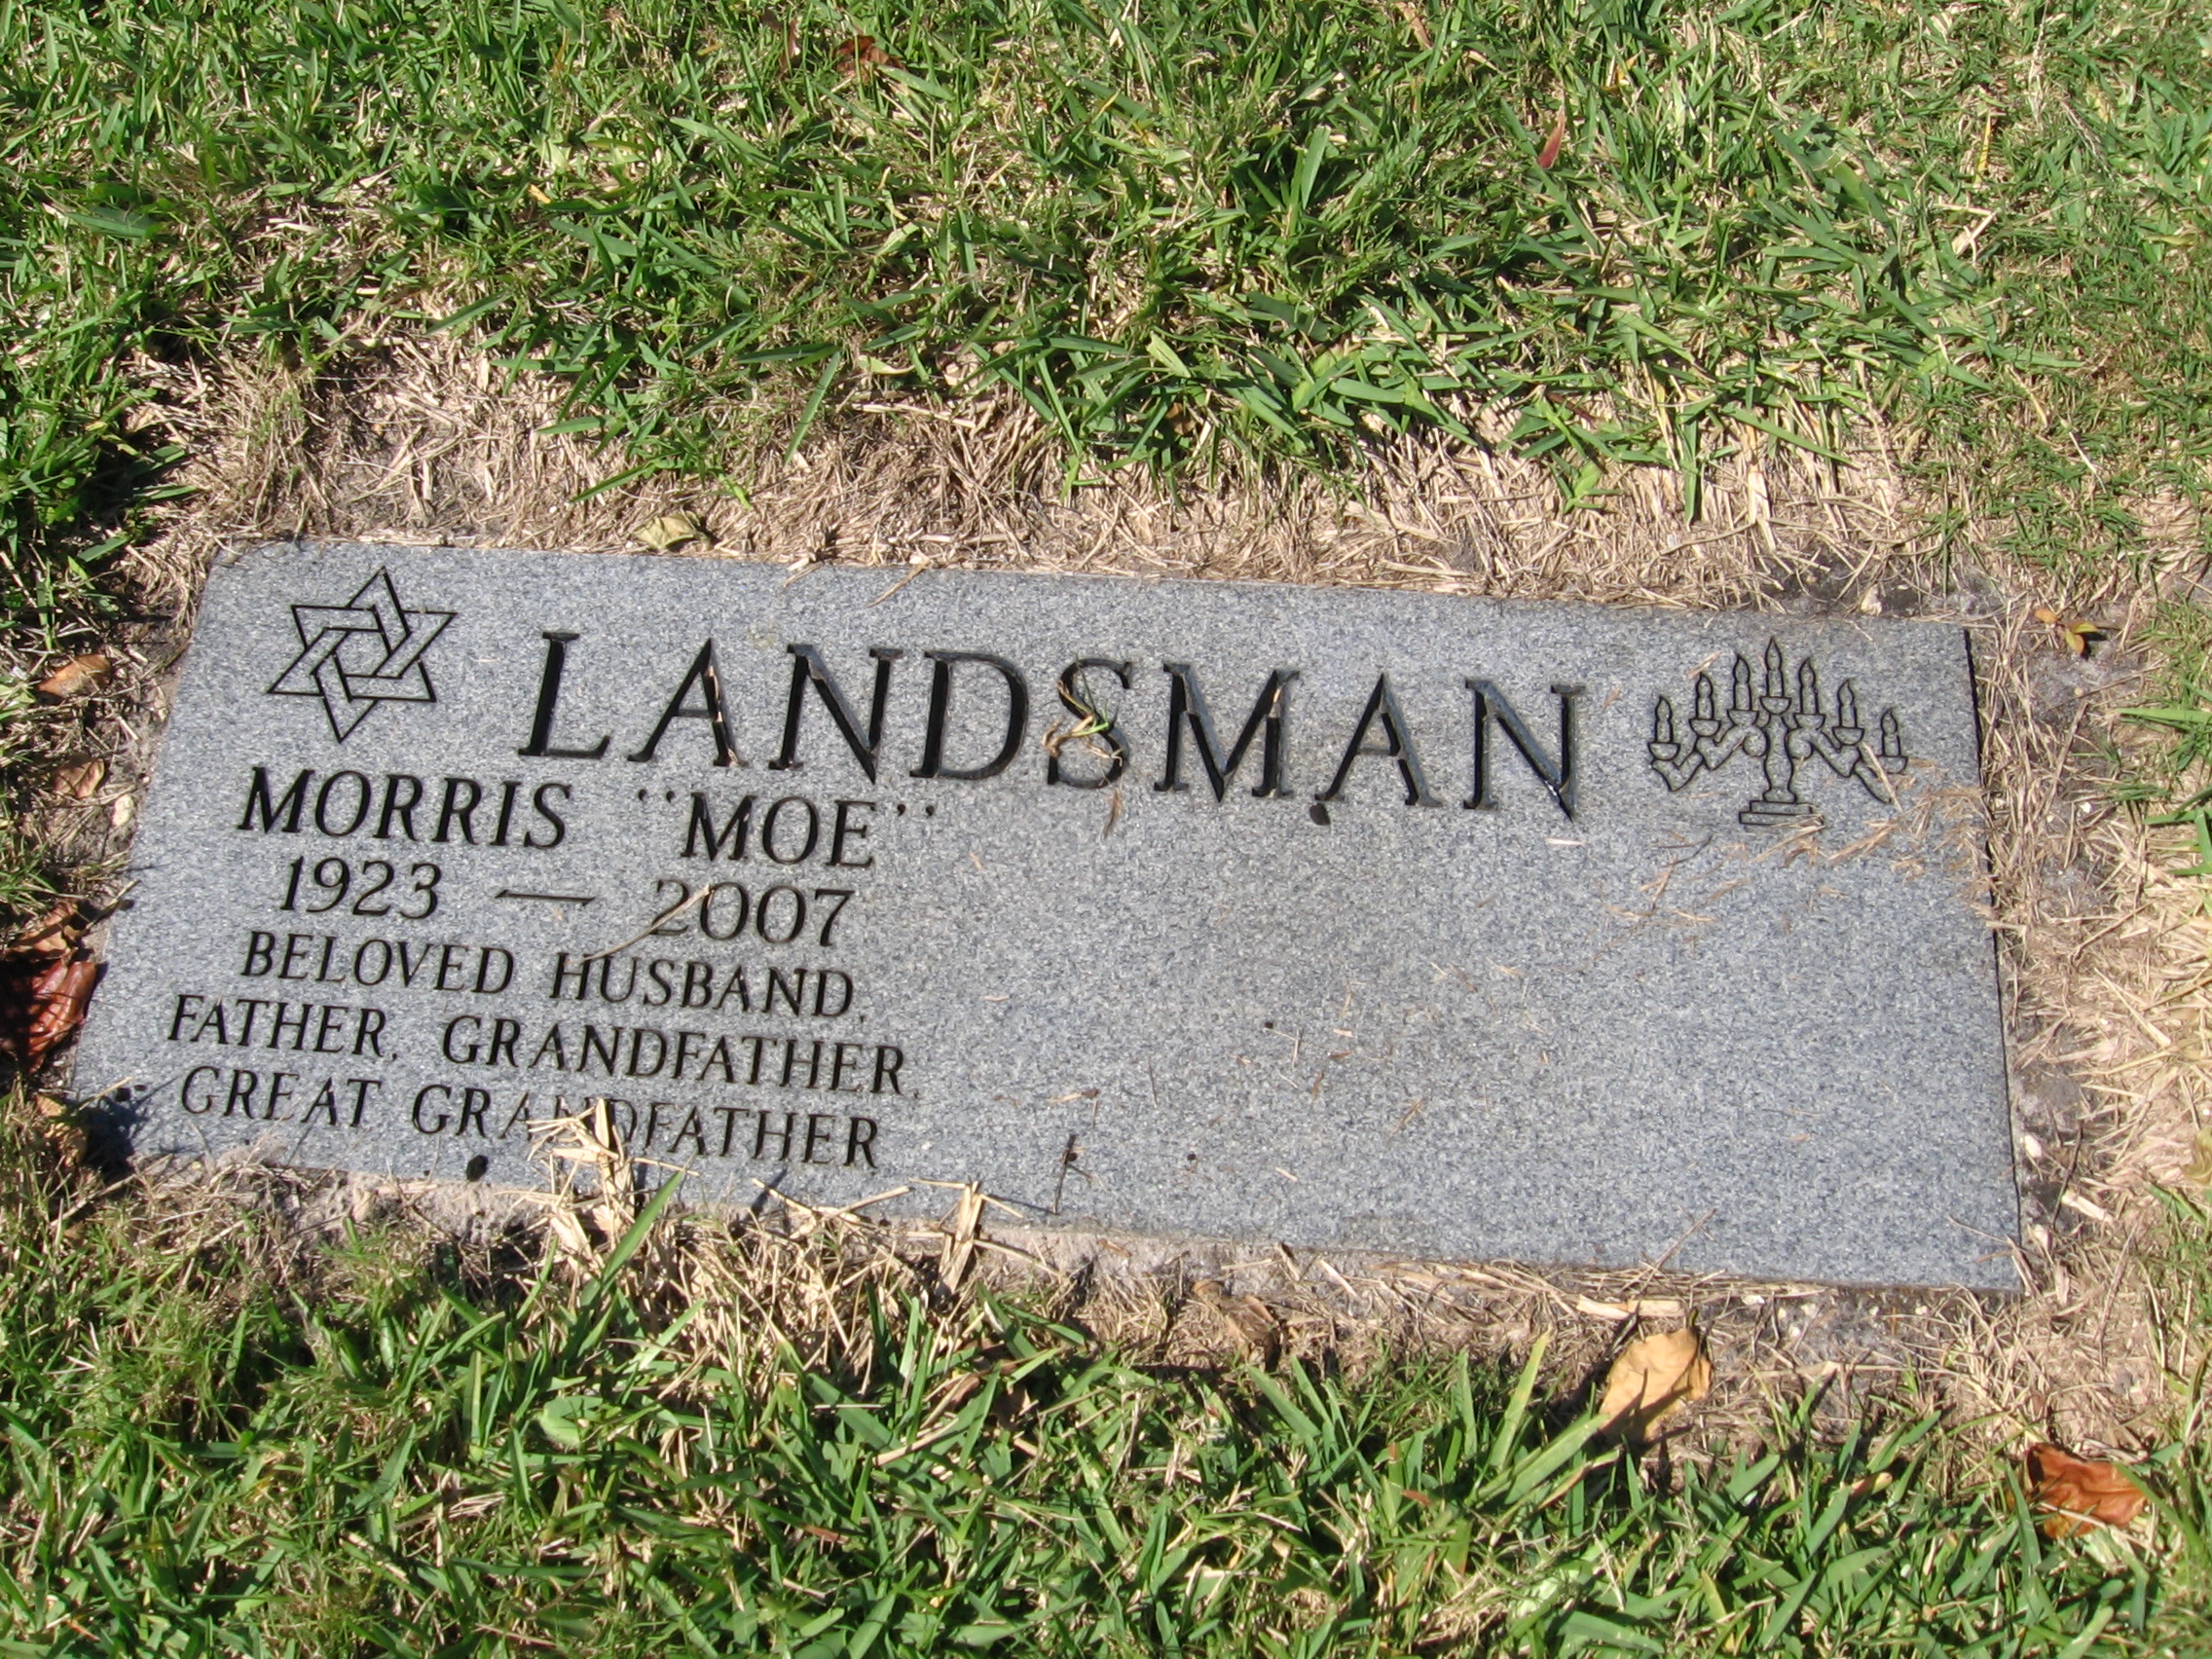 Morris "Moe" Landsman